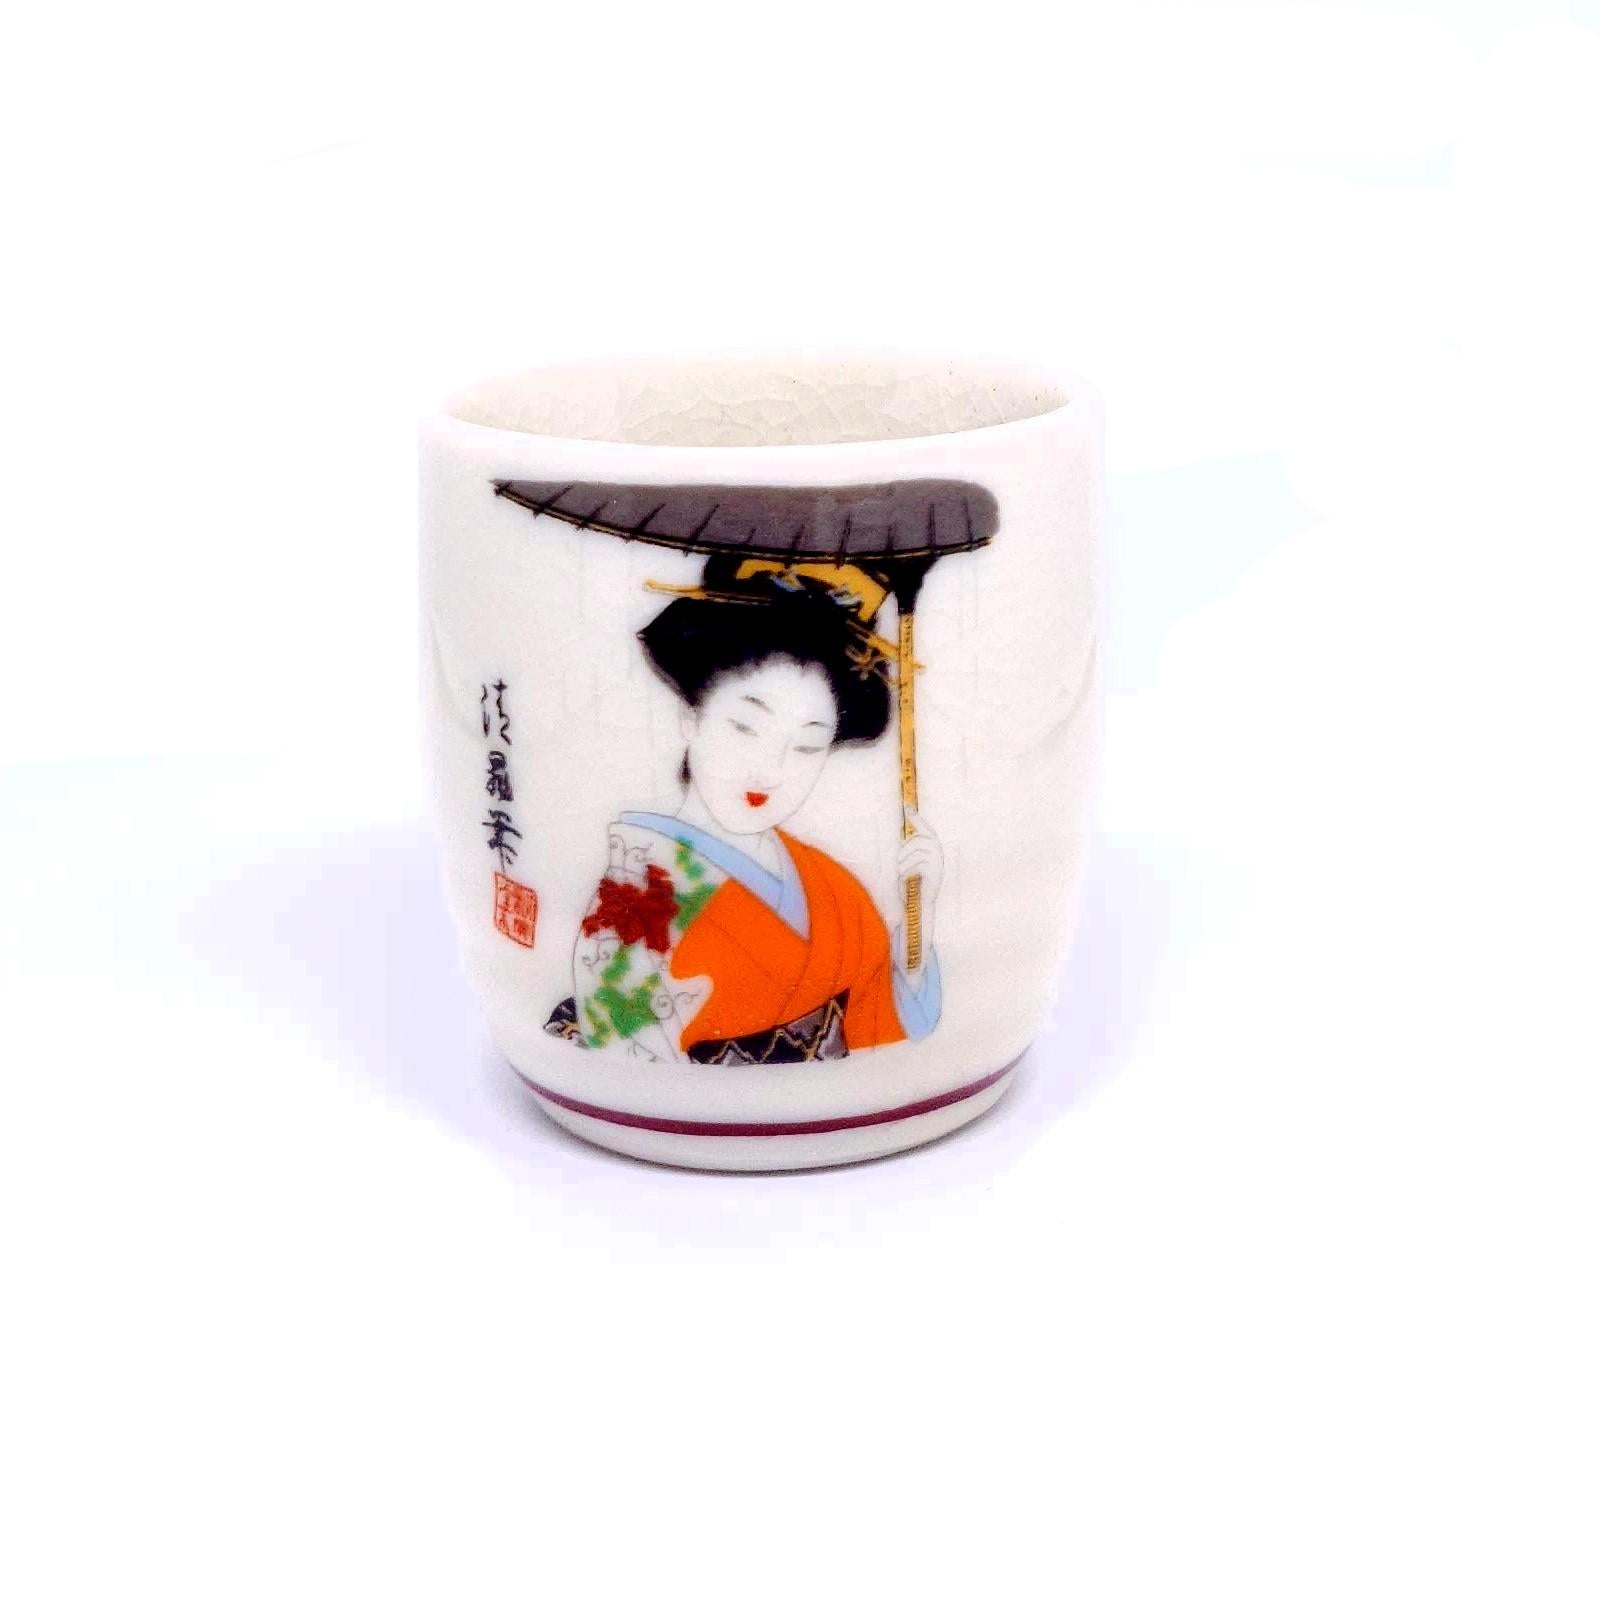 Retro Vintage Japanese Hand Painted Ceramics Sake Set Geisha New in Box Made in Japan